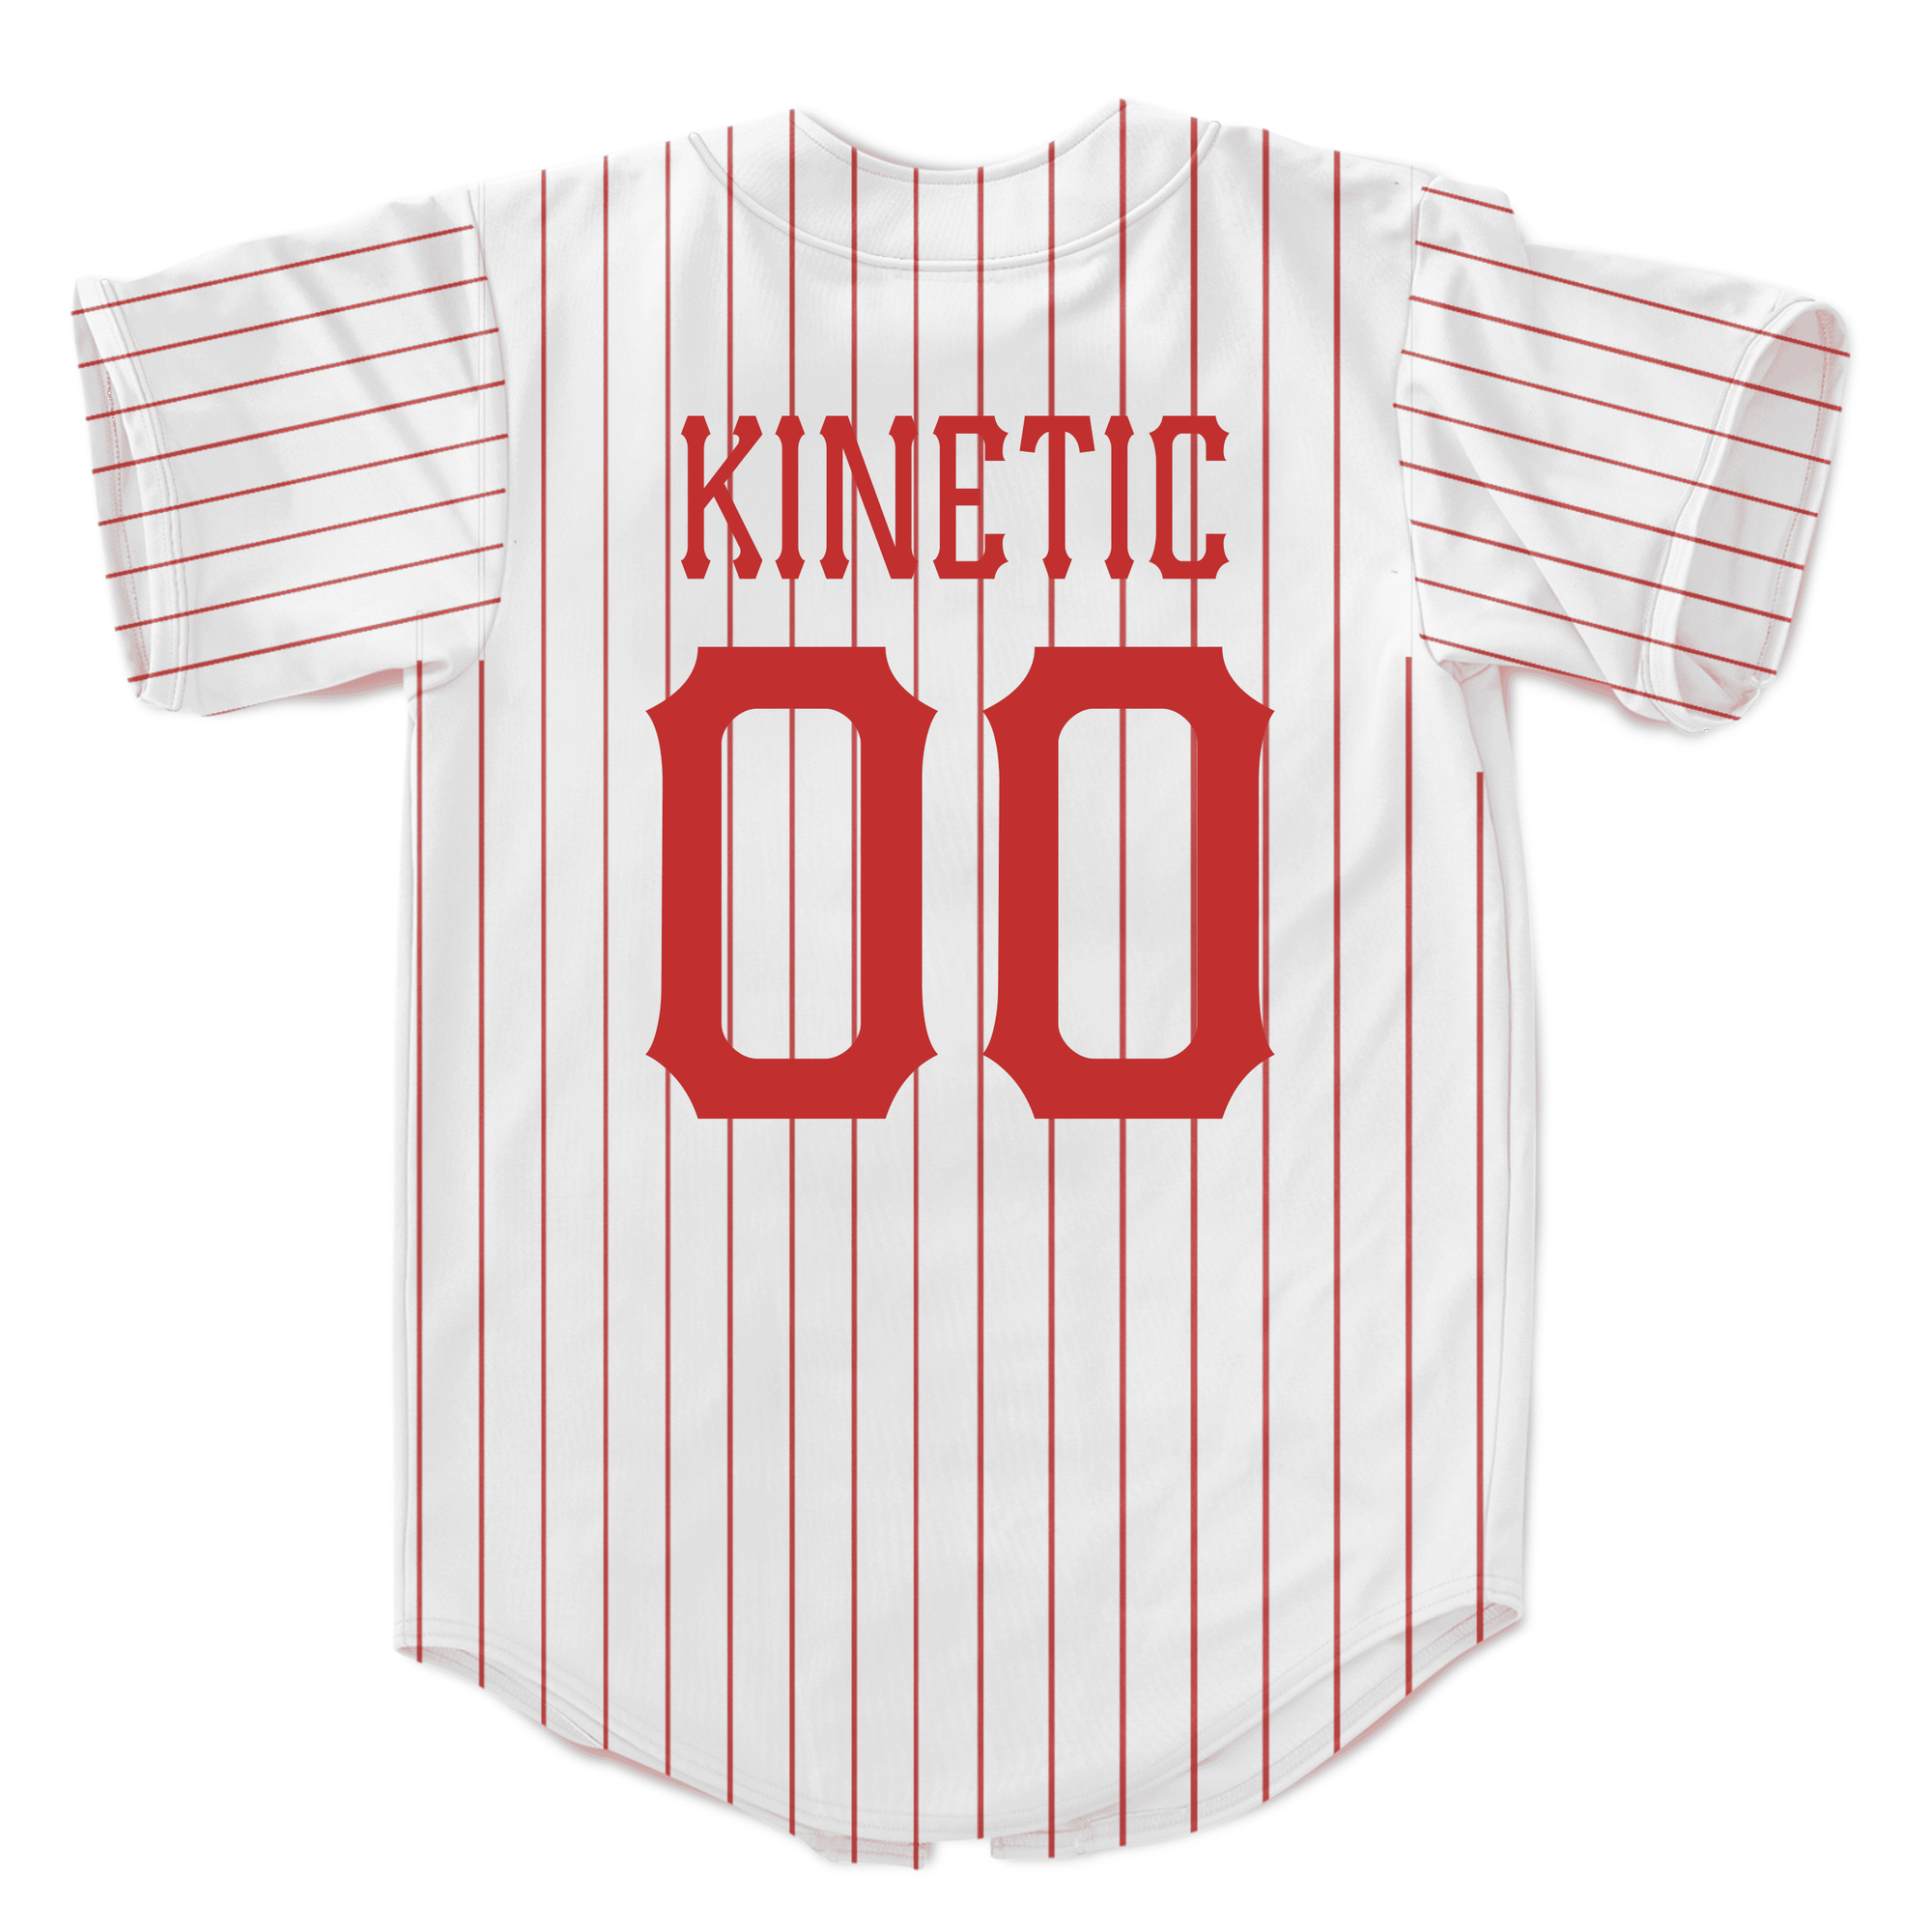 Pi Kappa Alpha - Red Pinstripe Baseball Jersey